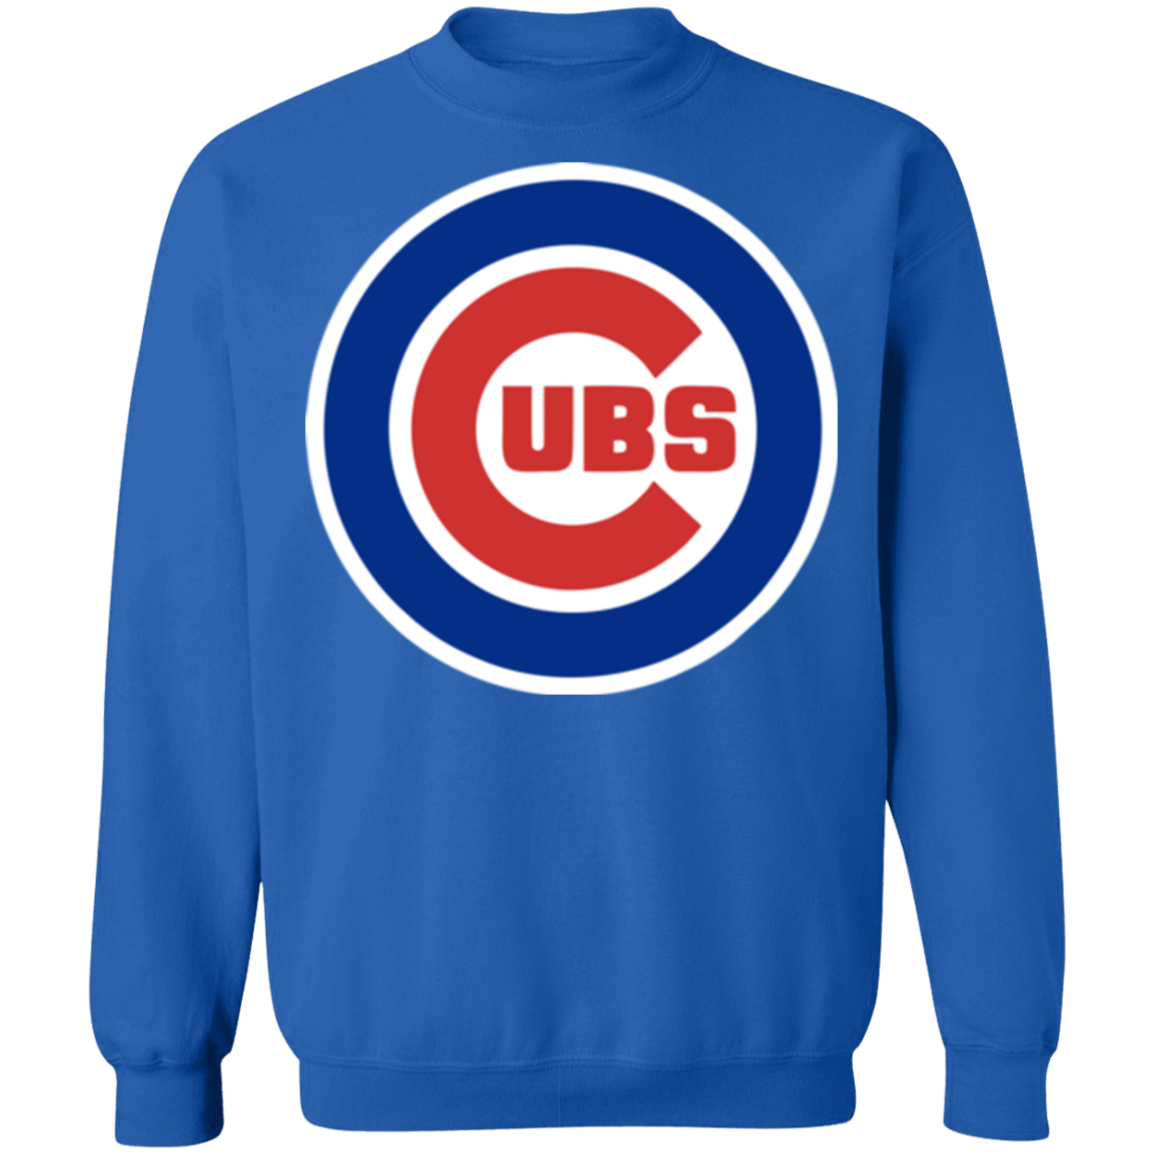 cubs crewneck sweatshirt